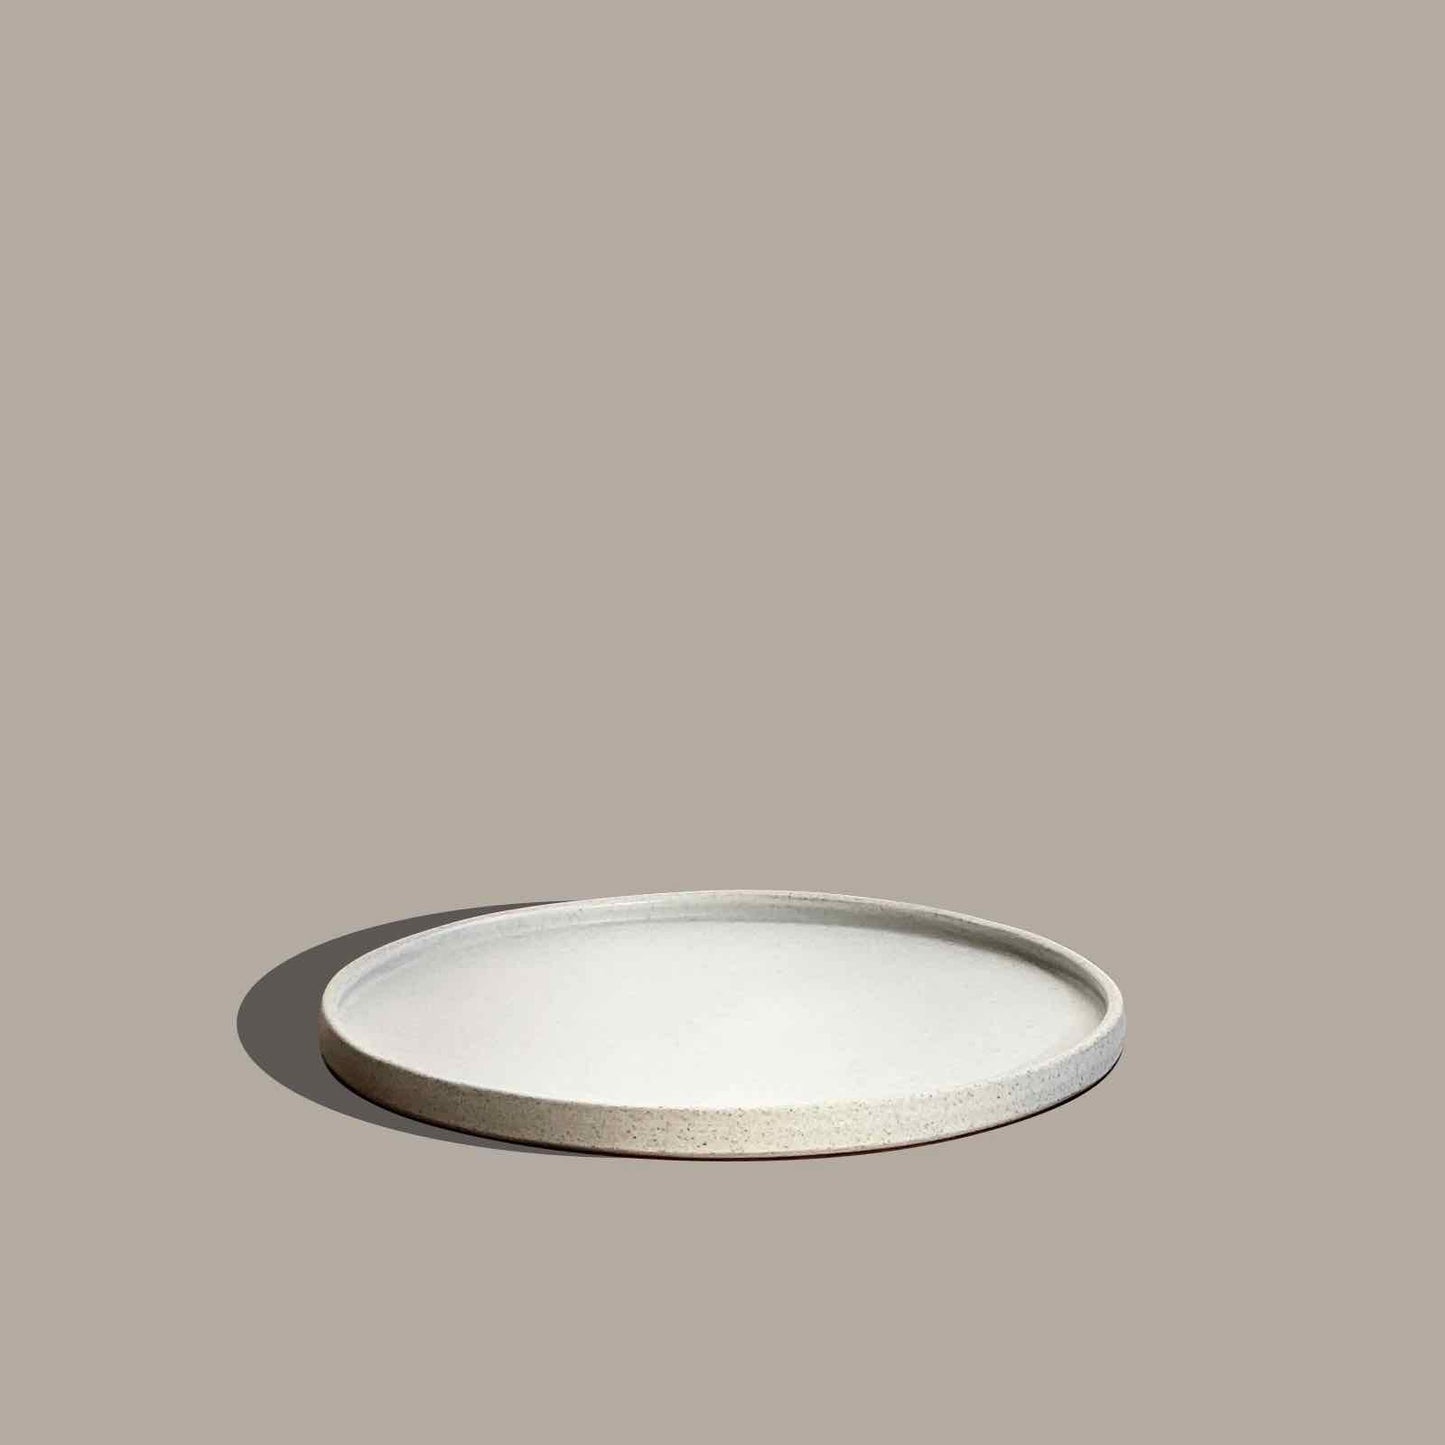 Ceramic tray in grey speckle